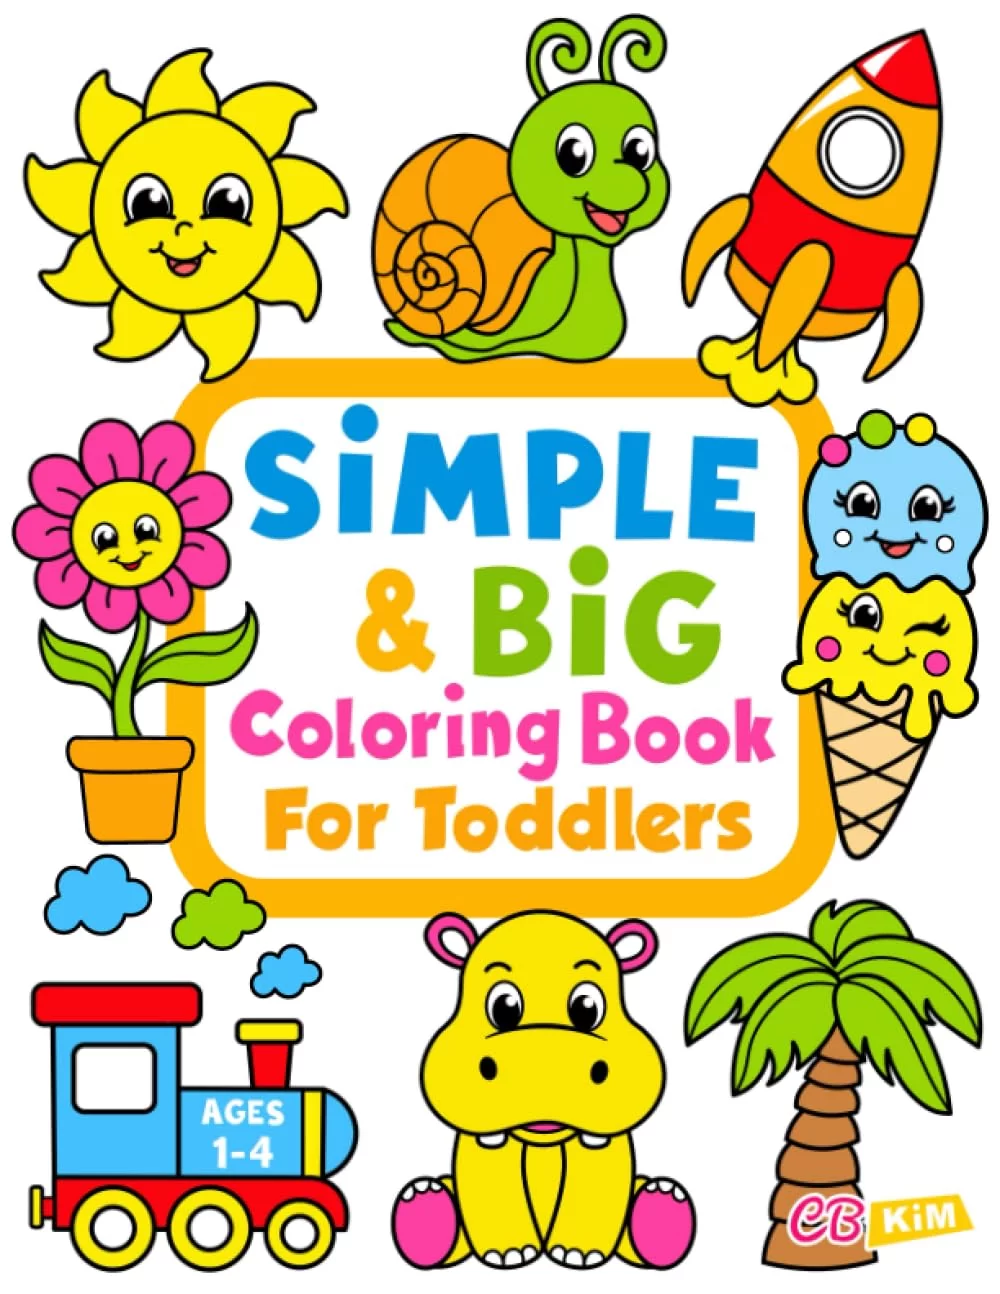 Simple & Big Coloring Book